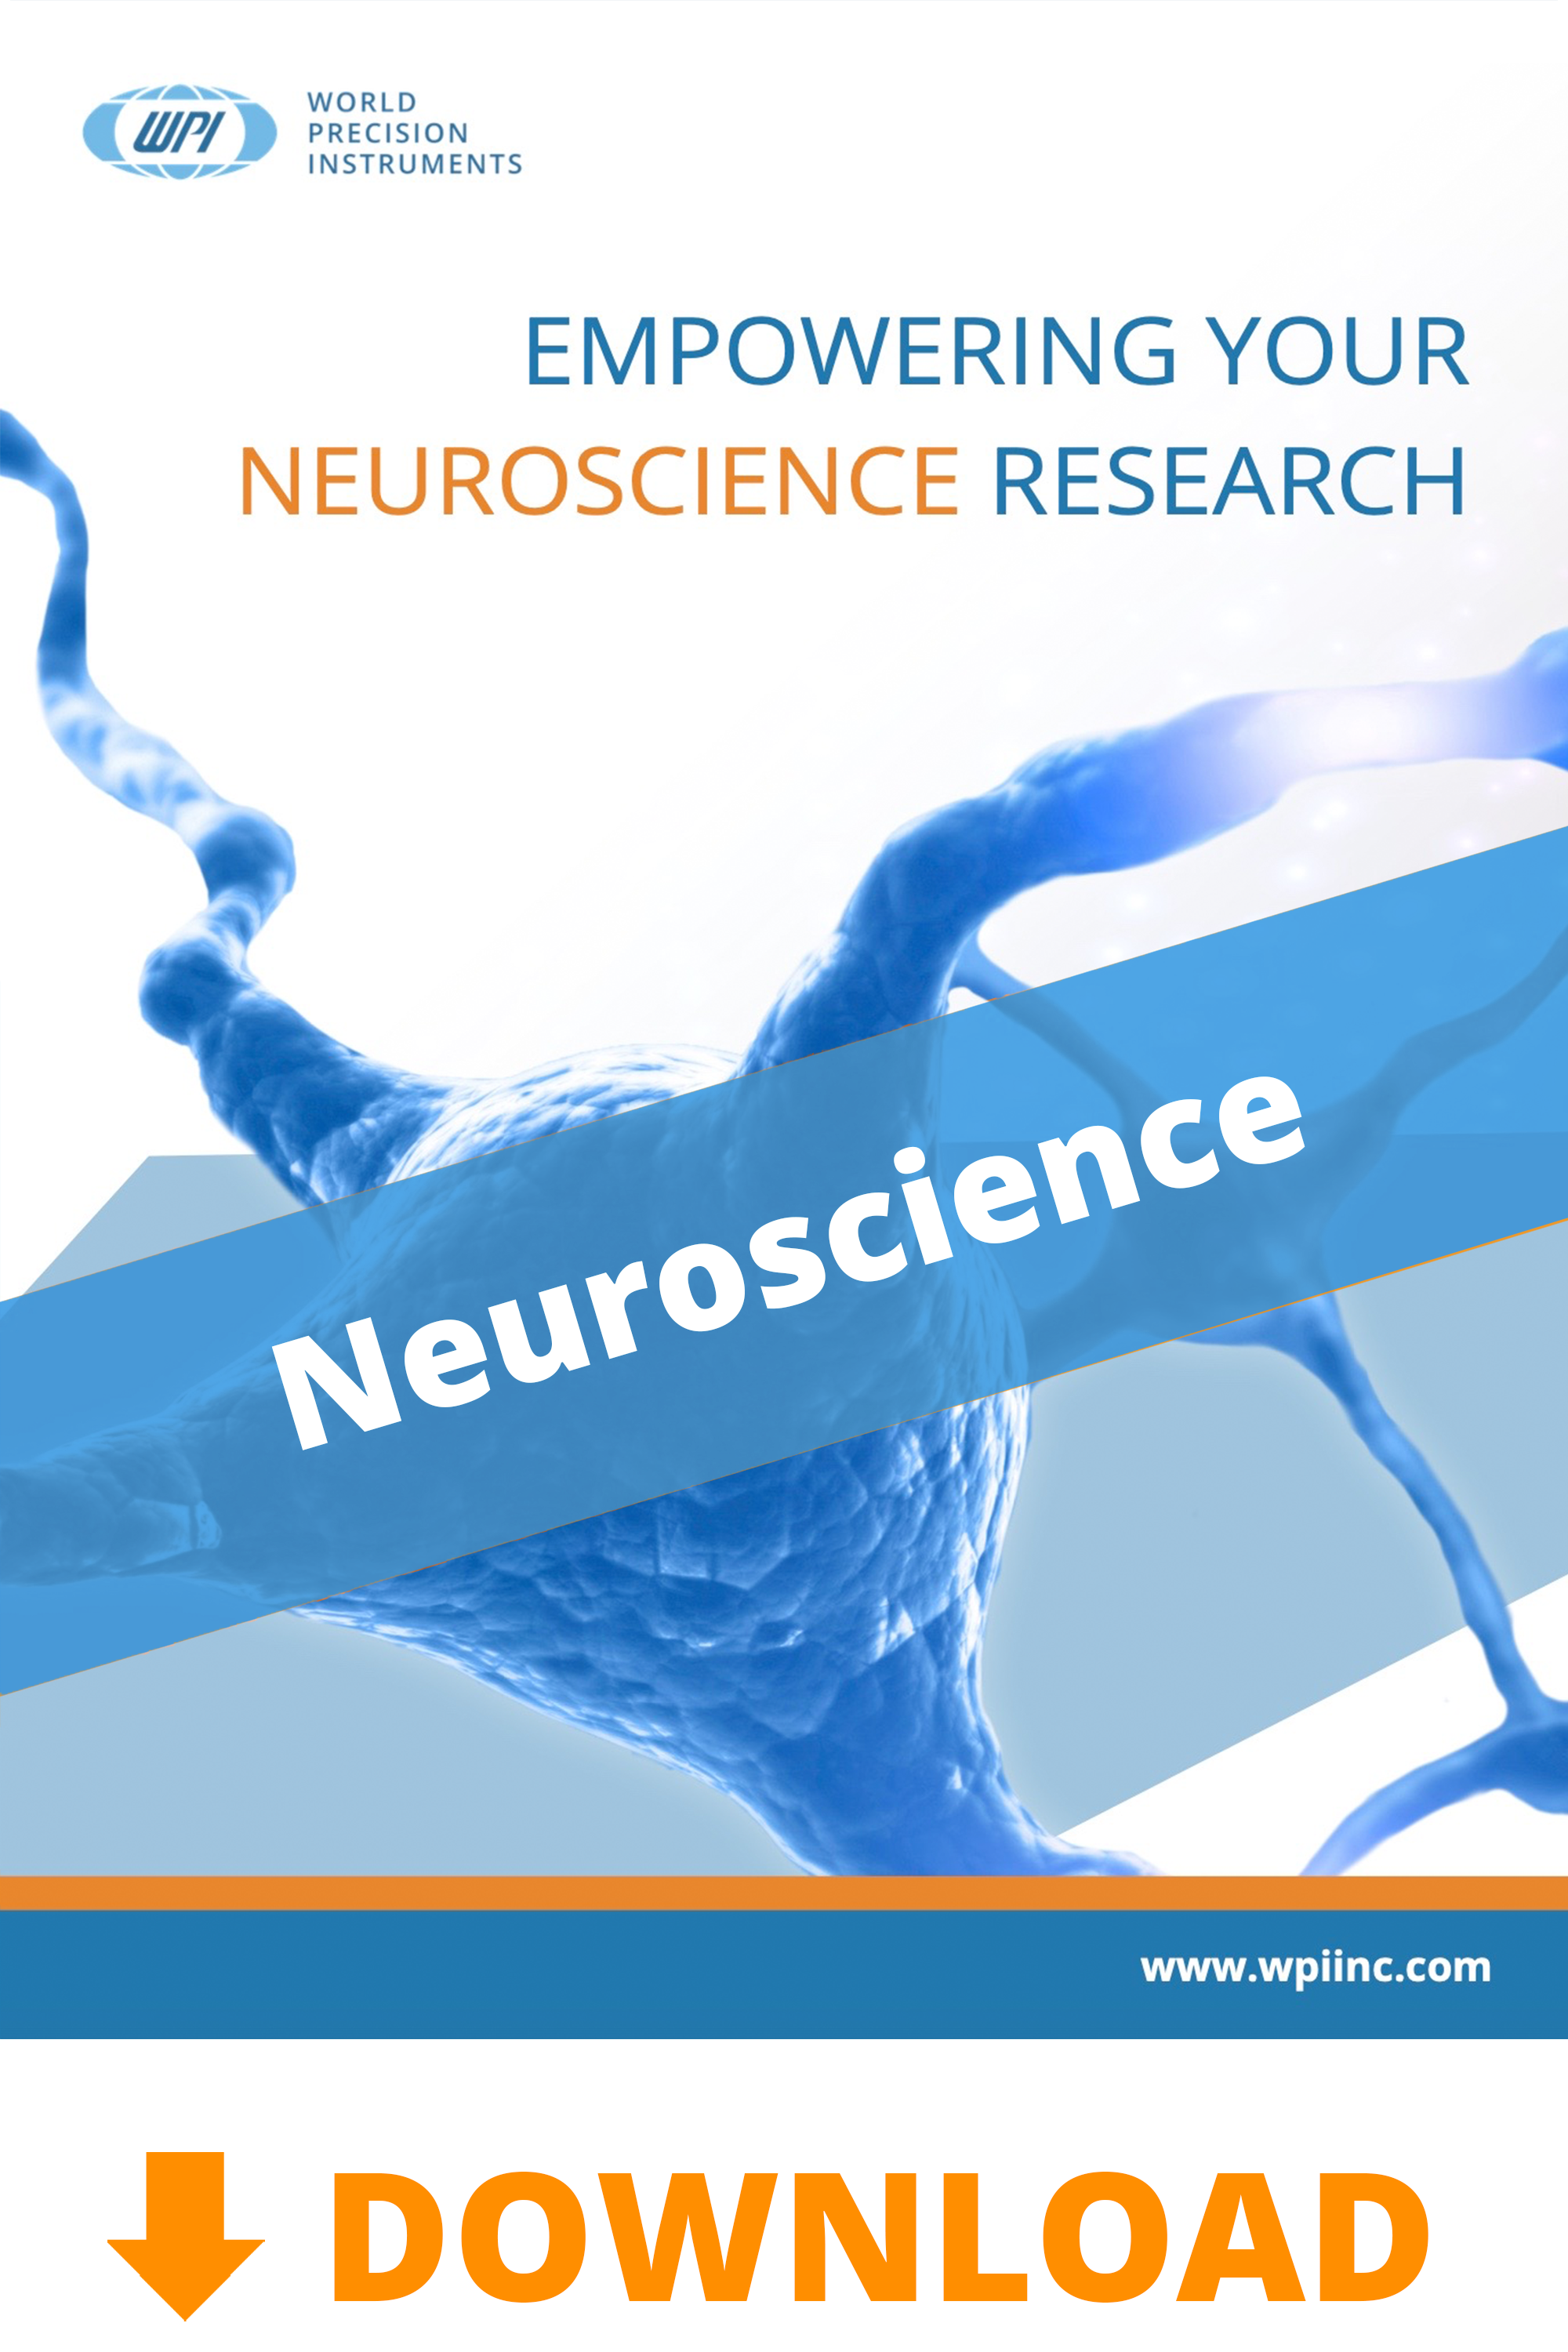 Download the Neuroscience Application brochure